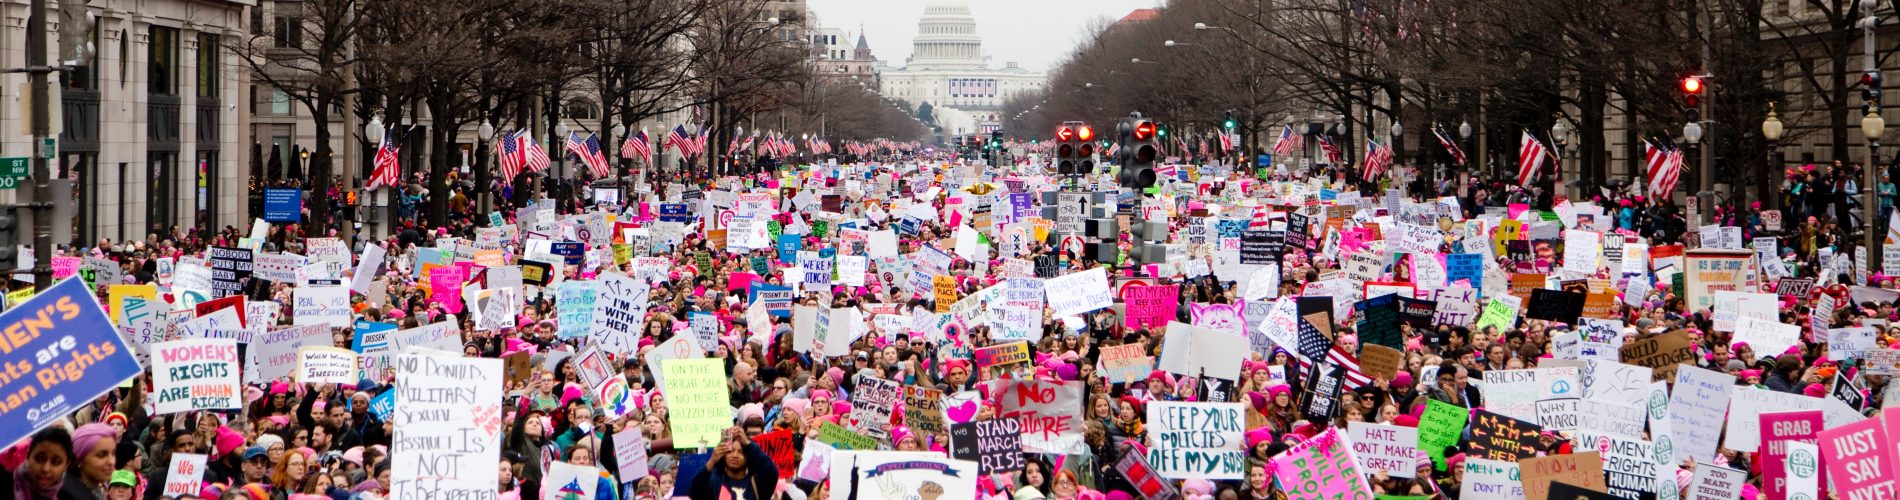 Women's March, global Feminism, Photo by Vlad Tchompalov on Unsplash